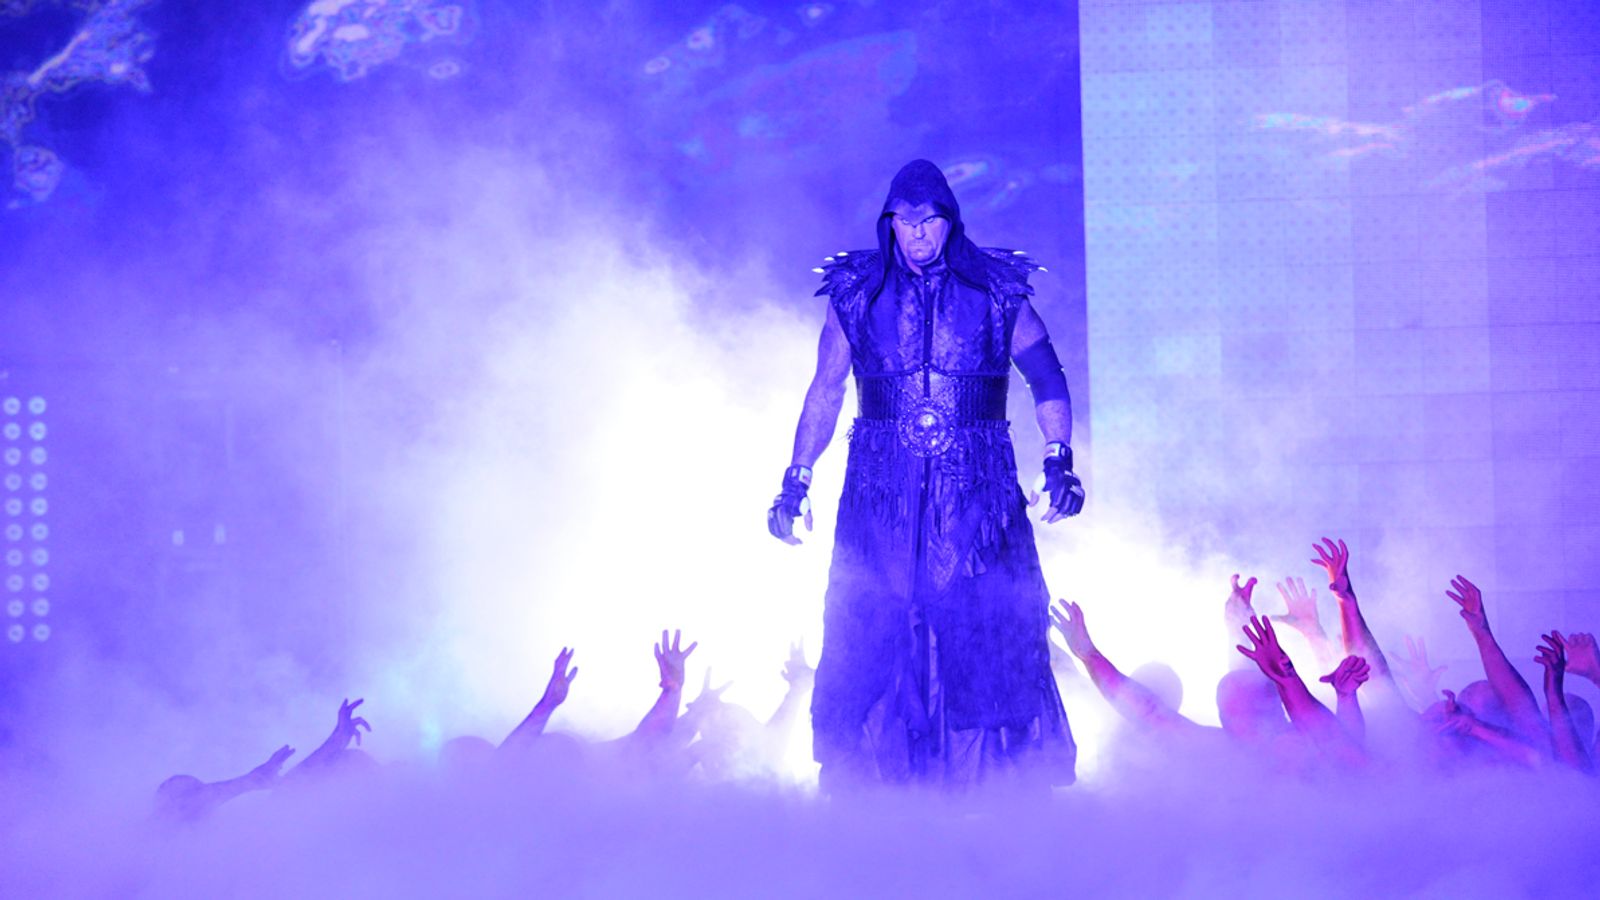 wwe undertaker wrestlemania 28 entrance